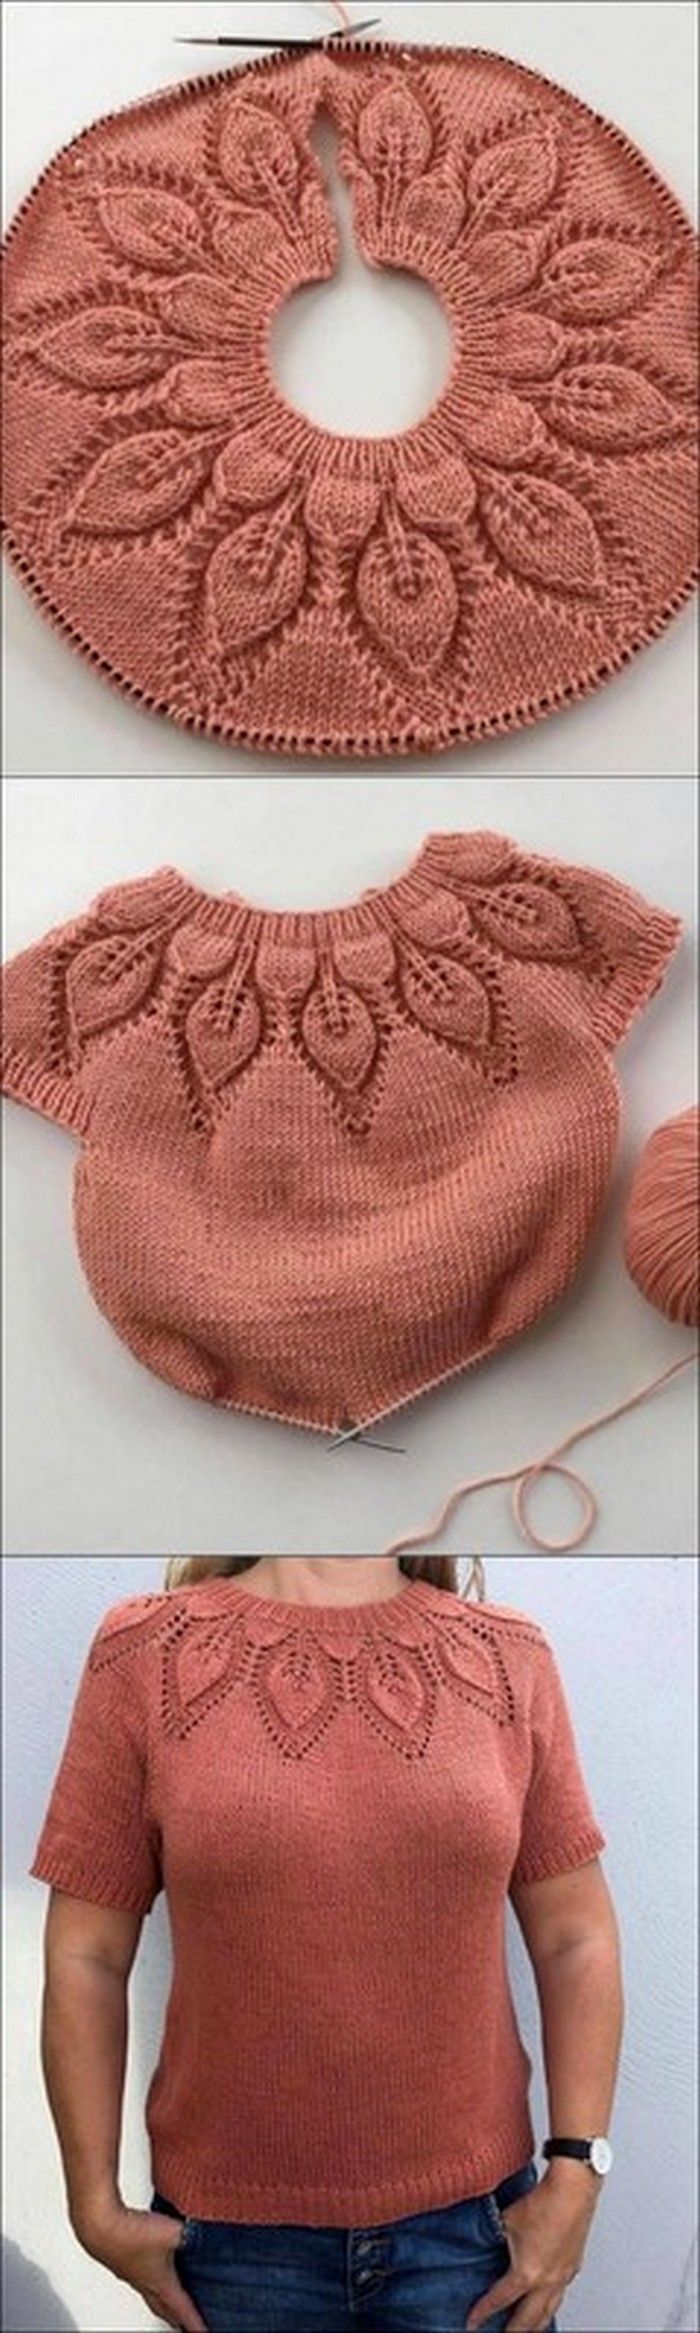 diy Modern-day Crochet Sweater Patterns